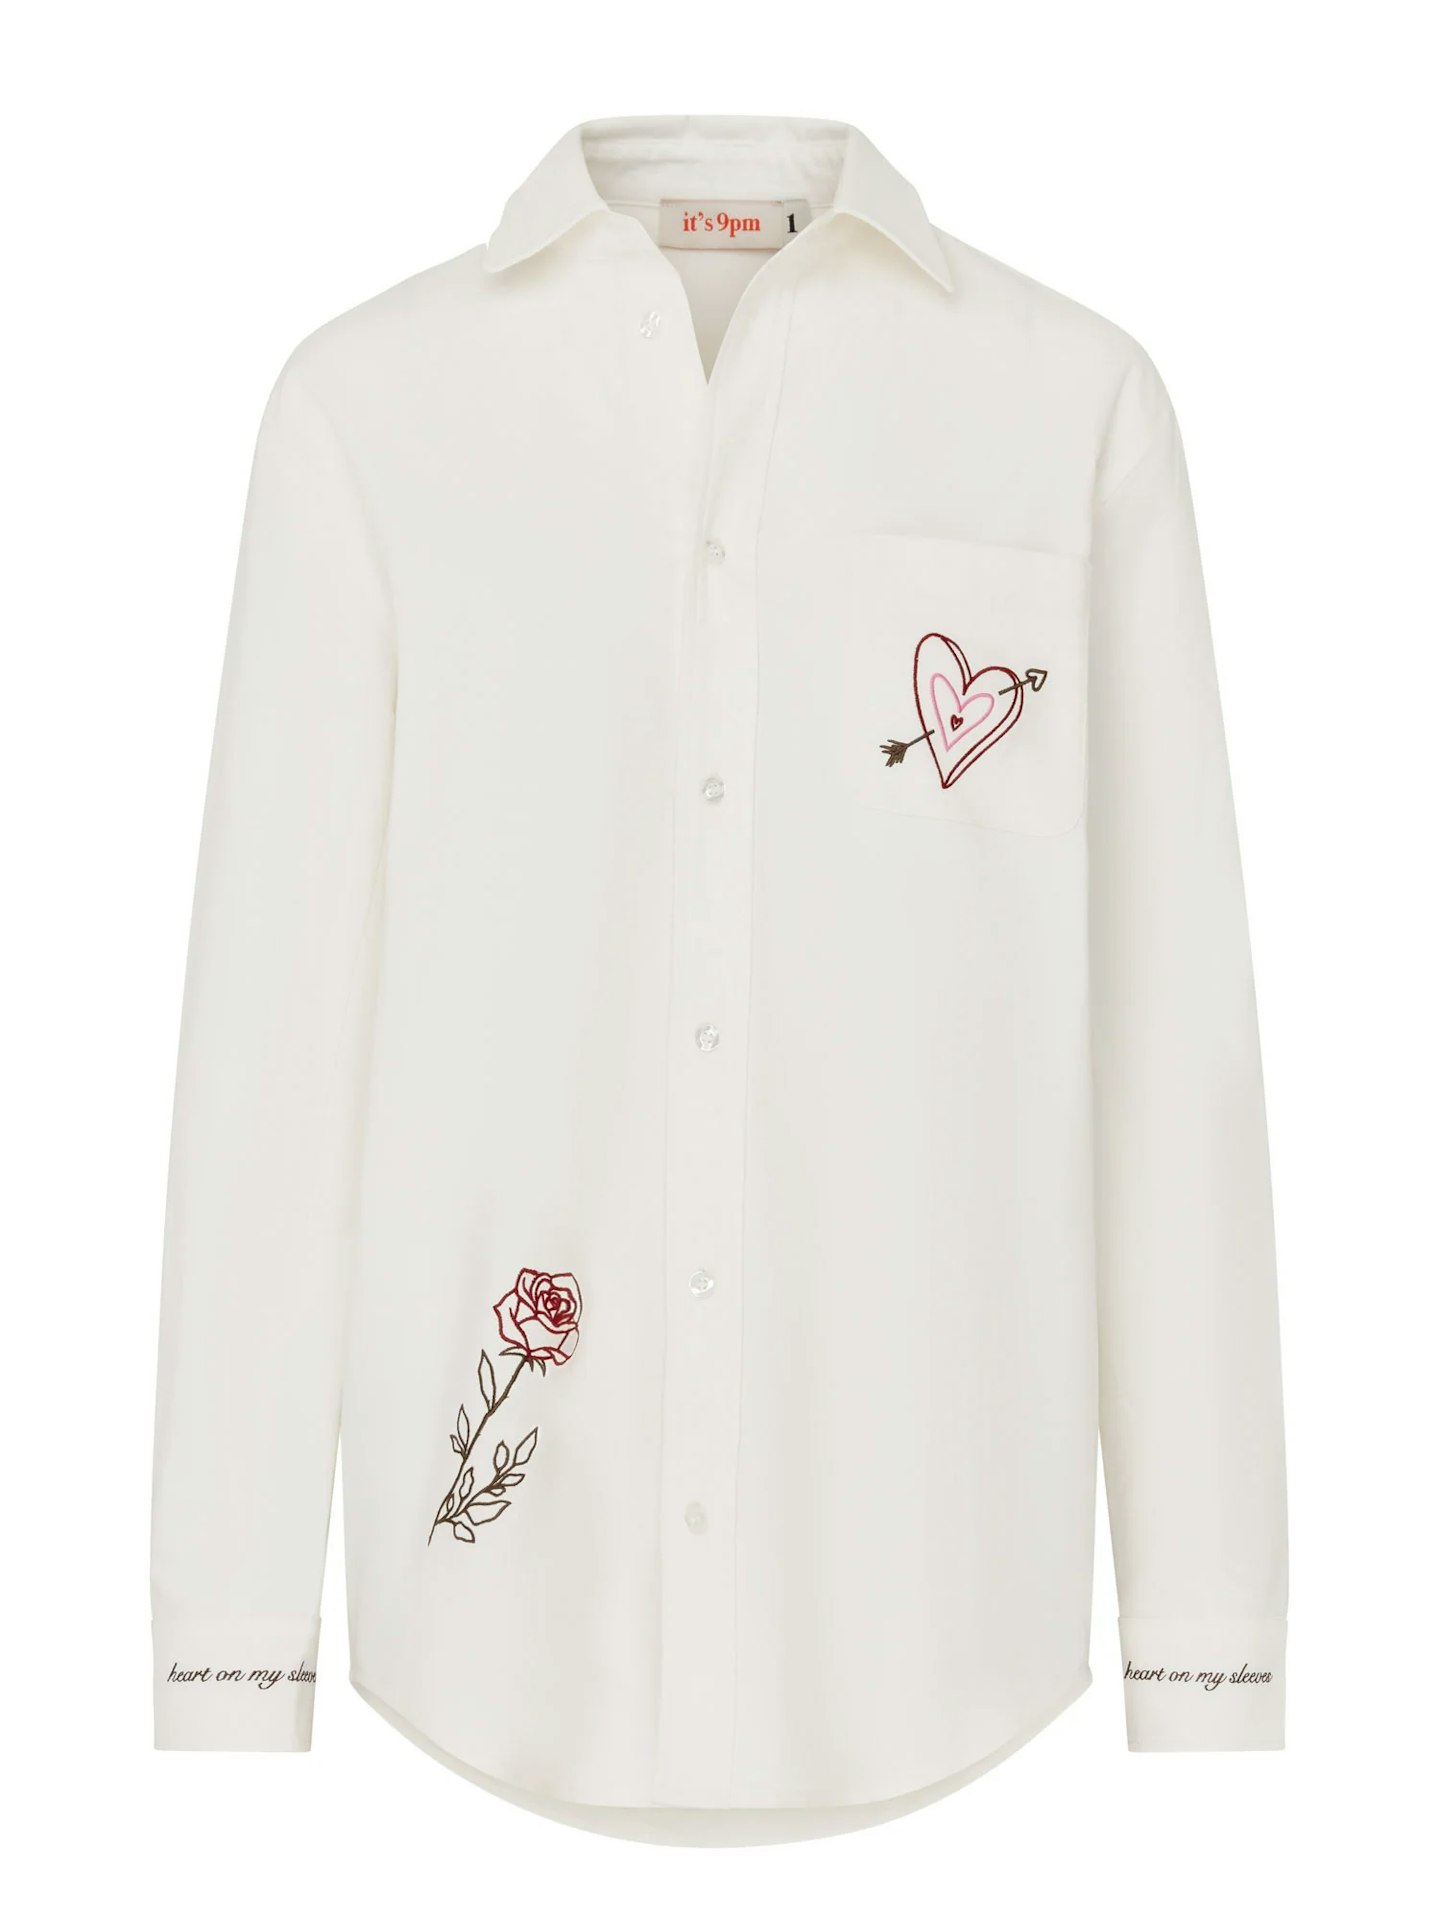 embroidered valentine's shirt 